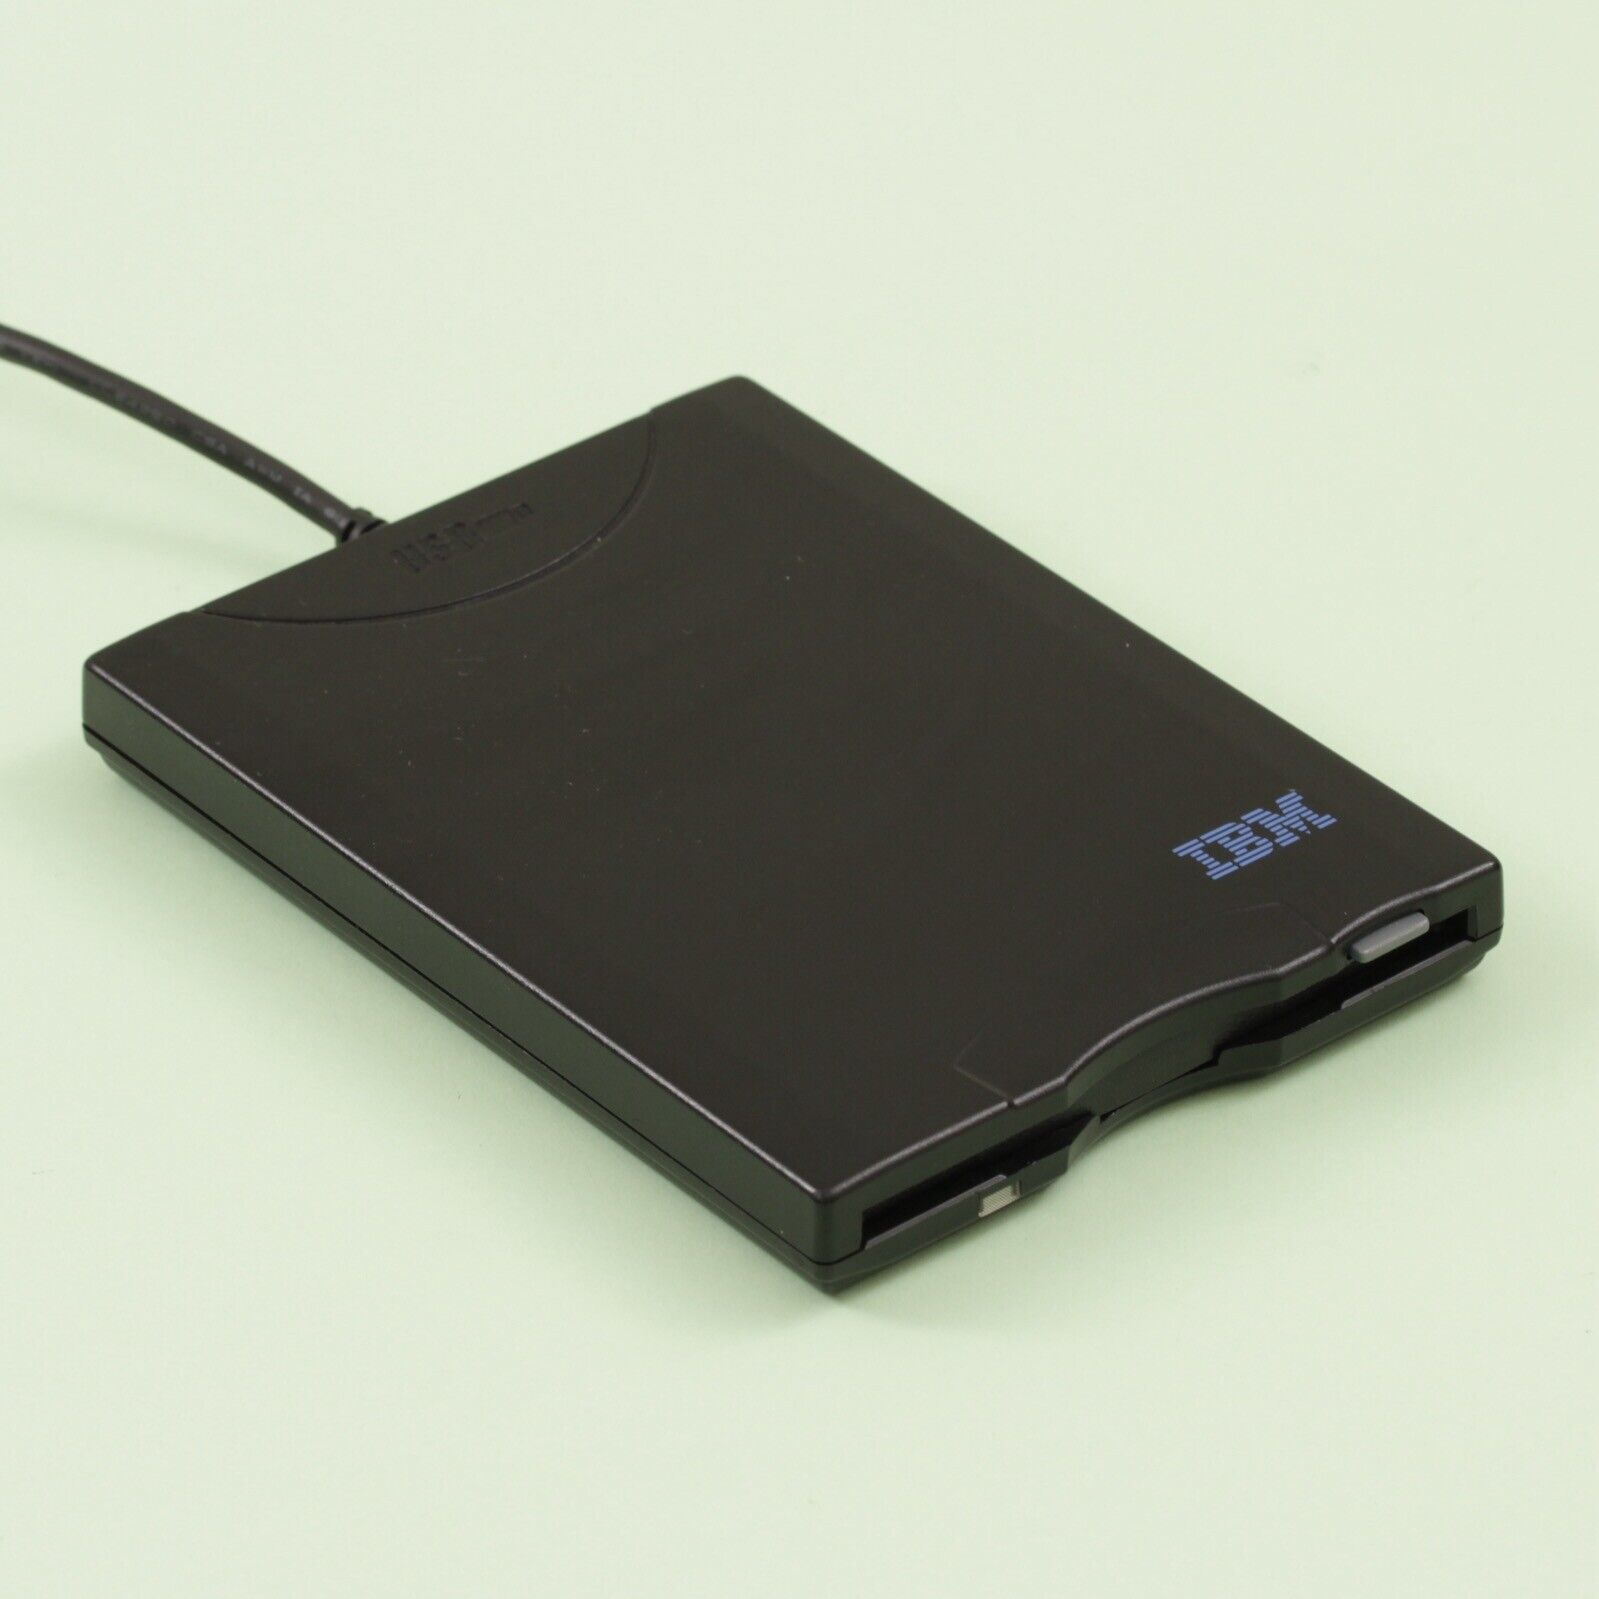 IBM Thinkpad Portable External USB 1.44 MB 3.5” FDD Floppy Disk Drive 06P5221